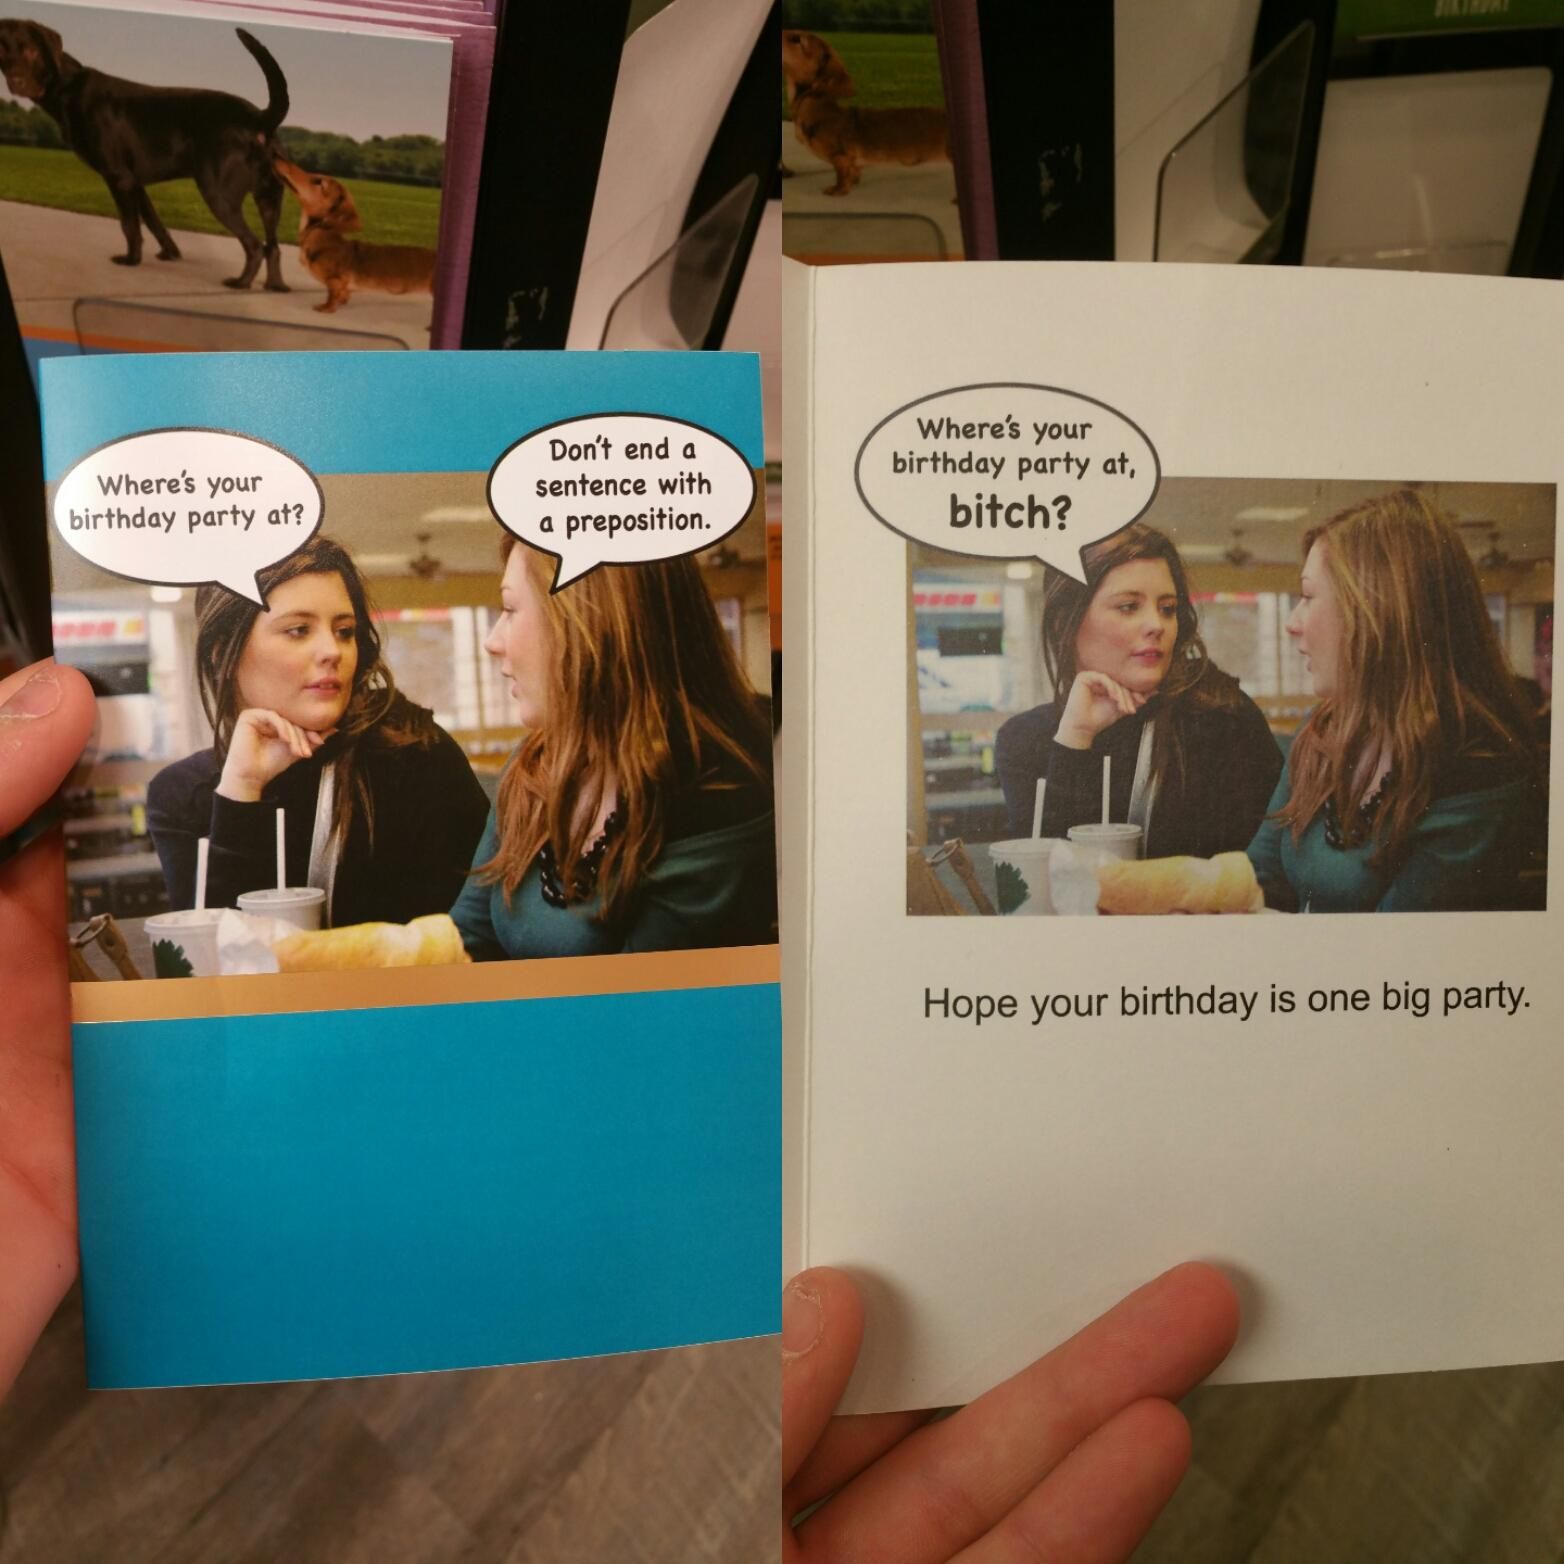 Found this interesting birthday card